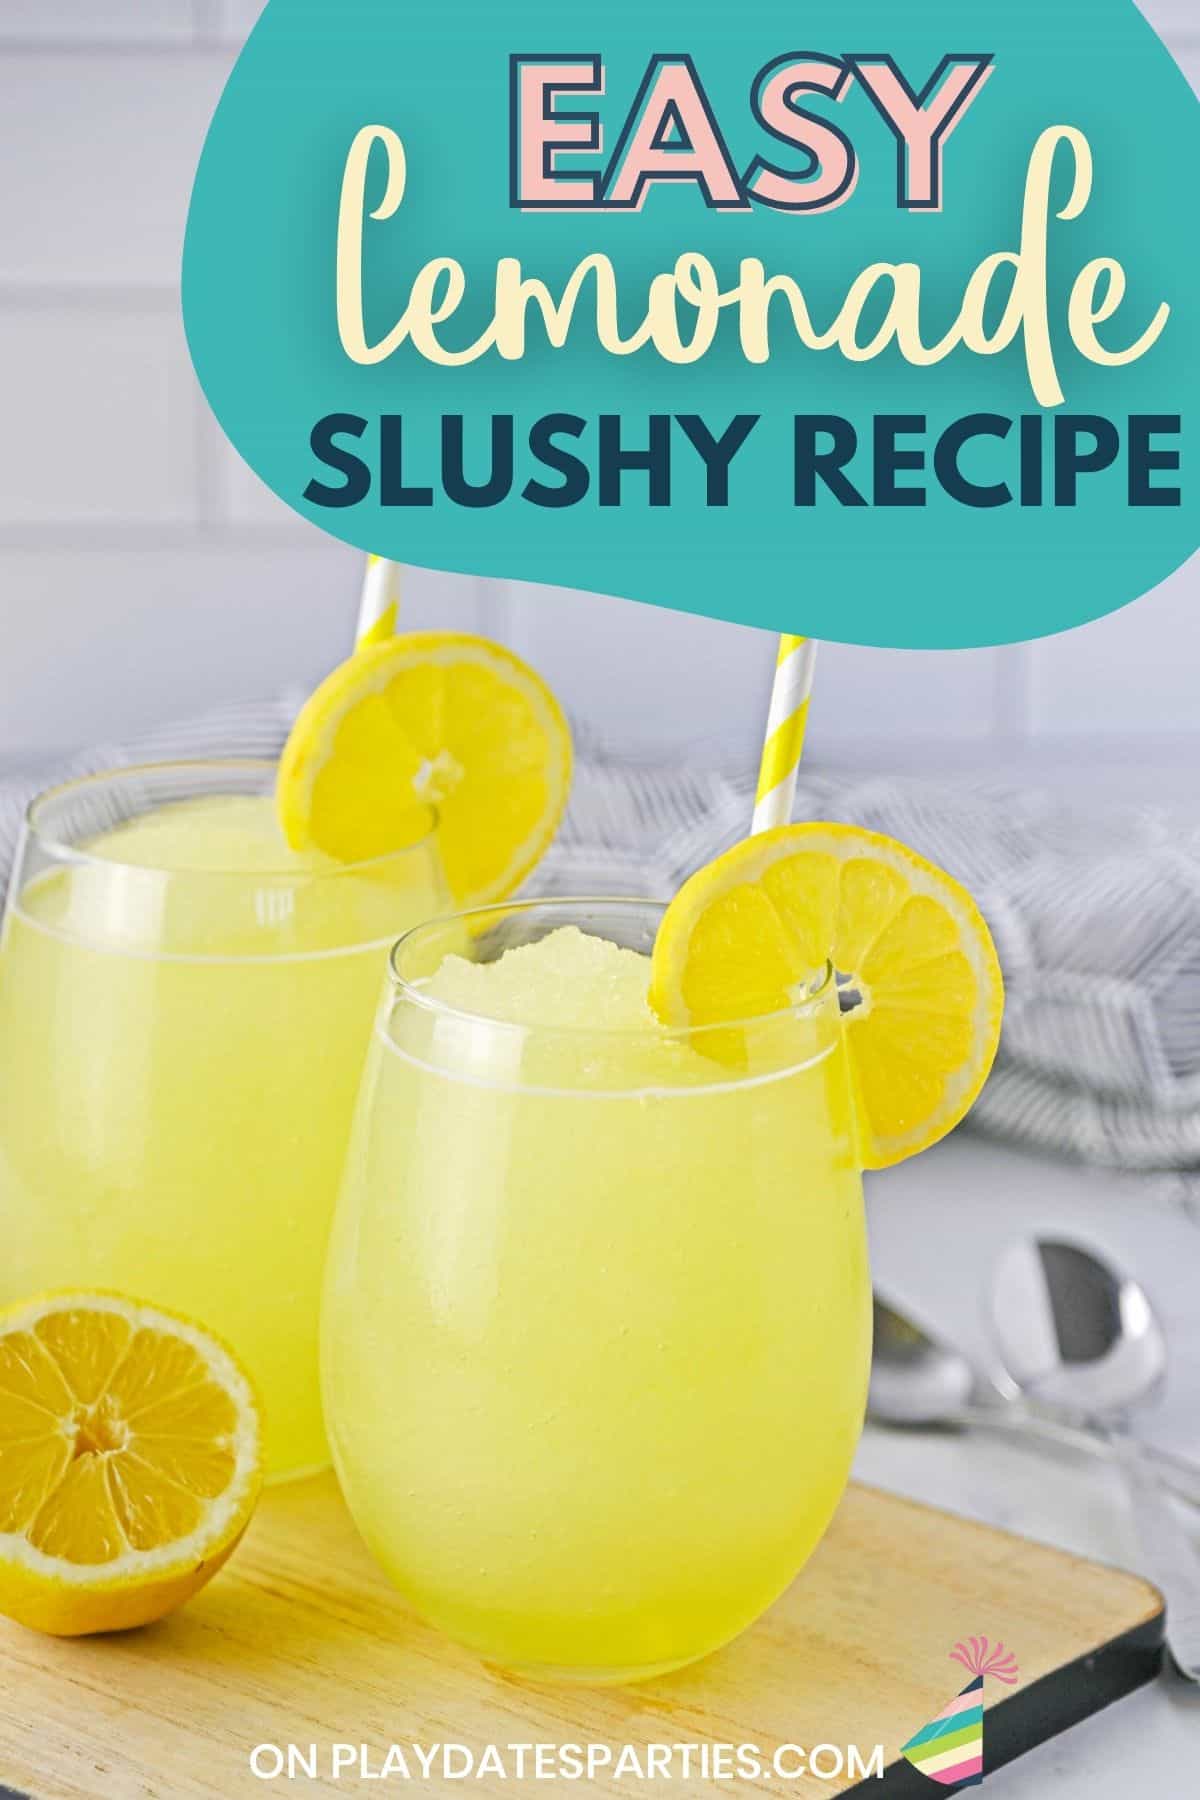 Easy lemonade slushy recipe Pin image.